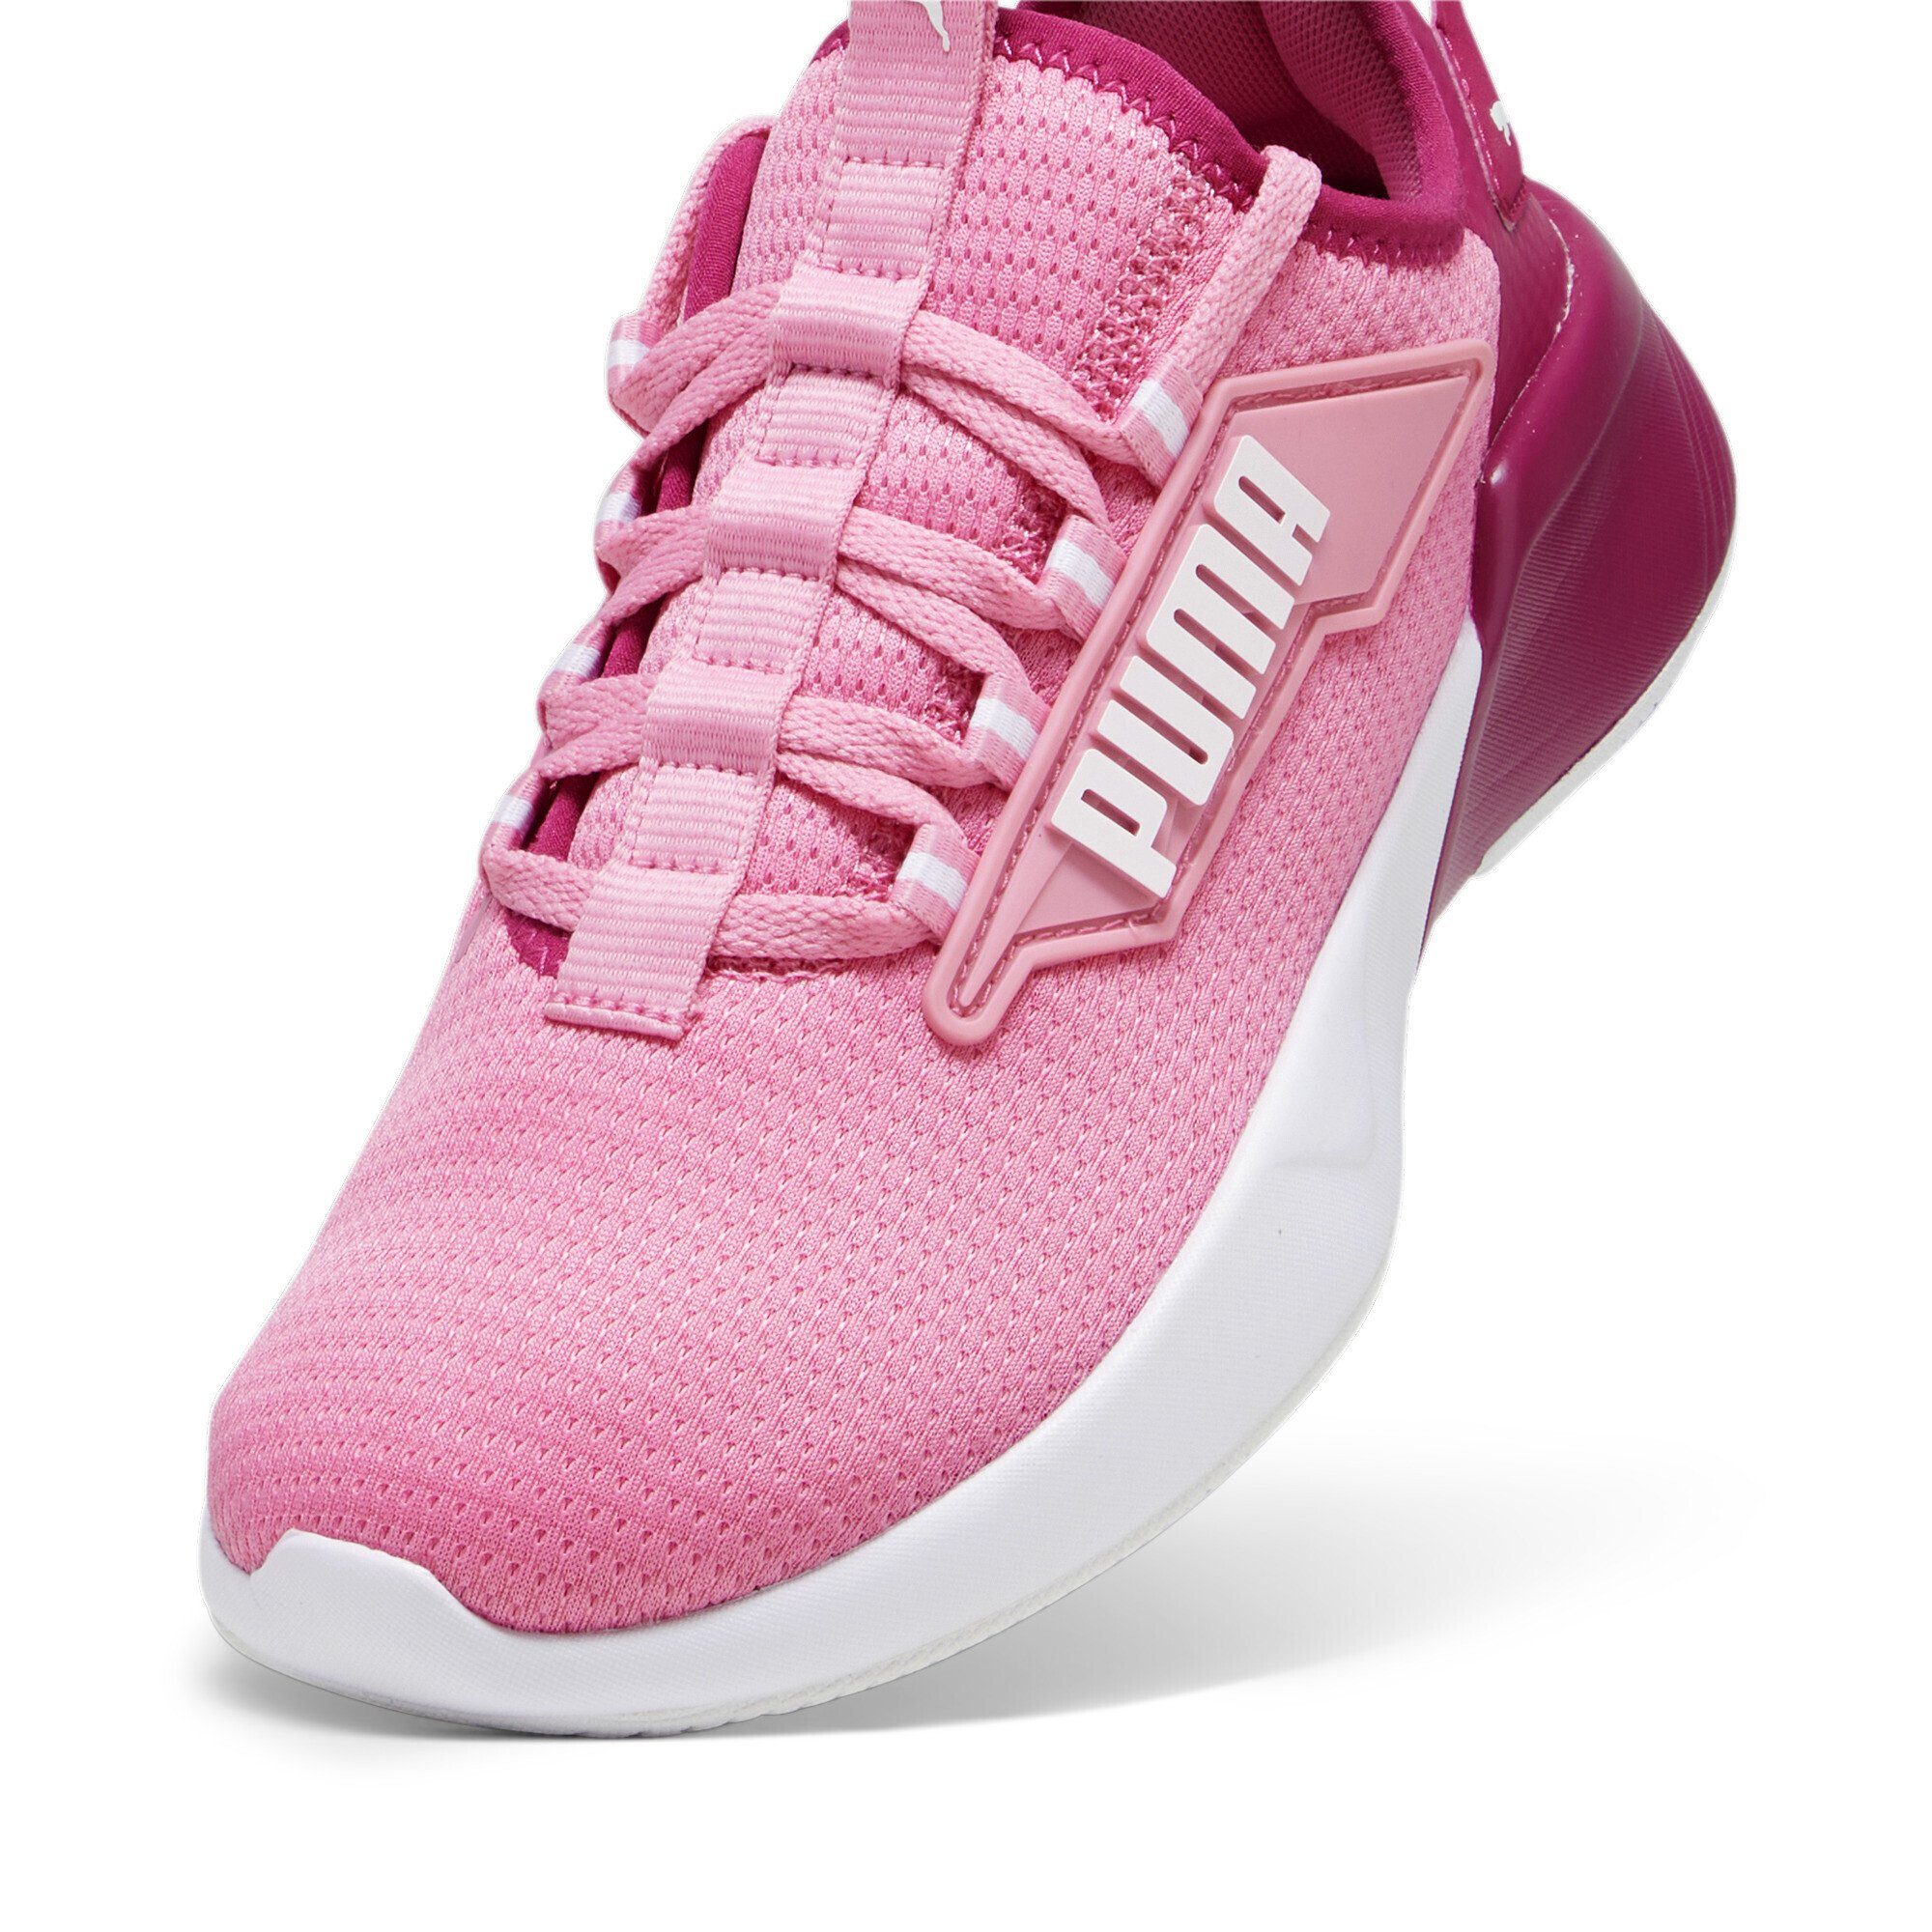 PUMA Retaliate Jugendliche White Pinktastic Strawberry Pink Burst Sneakers 2 Laufschuh